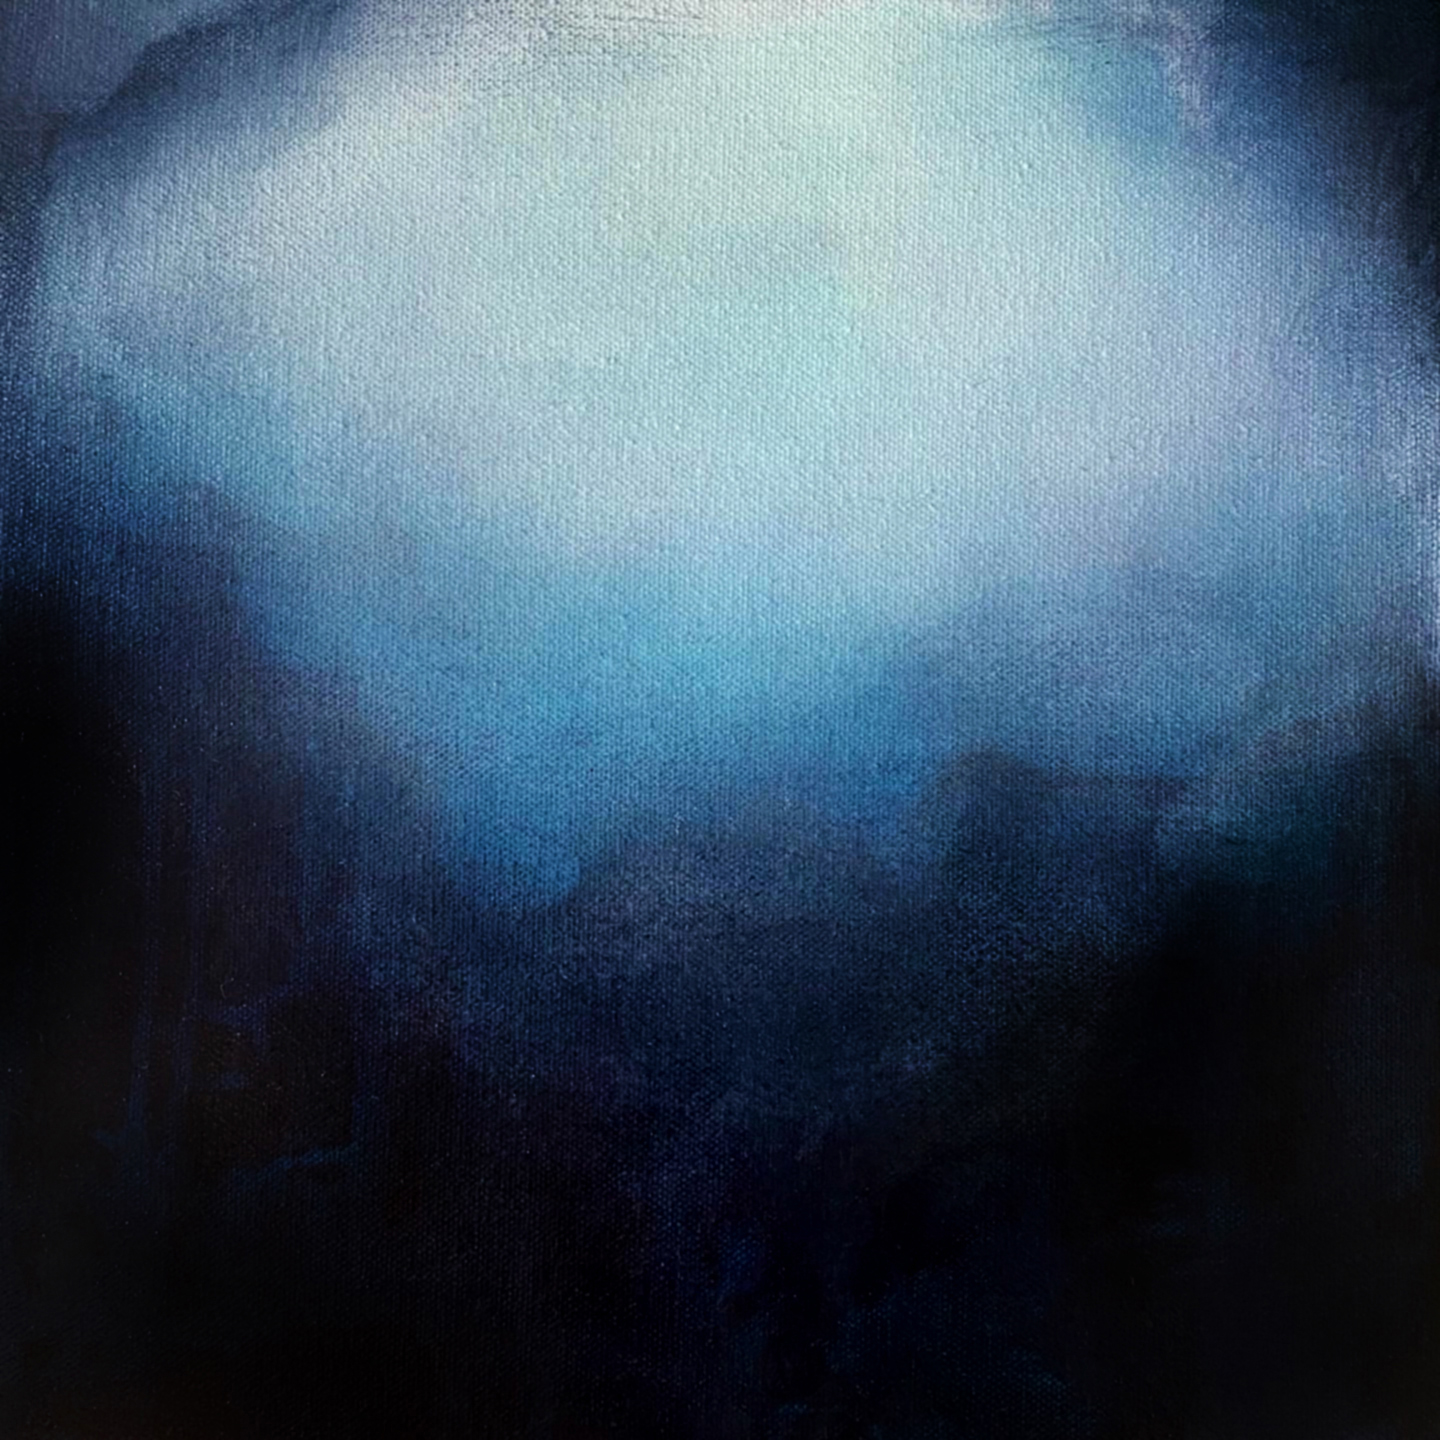 Ocean 1 by Anita Jokovich | Lethbridge 20000 2021 Finalists | Lethbridge Gallery